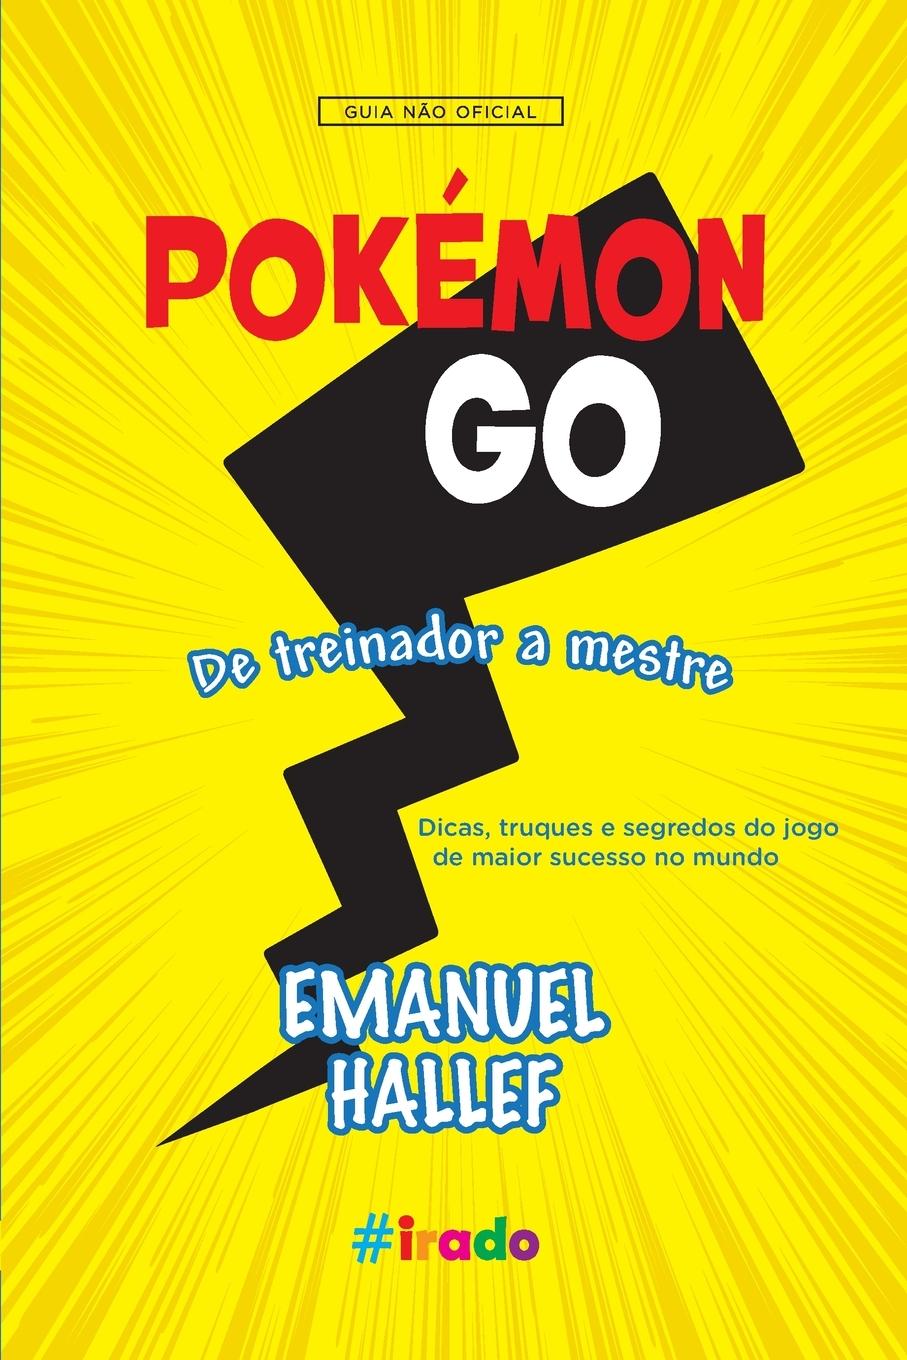 Book Pokemon GO 